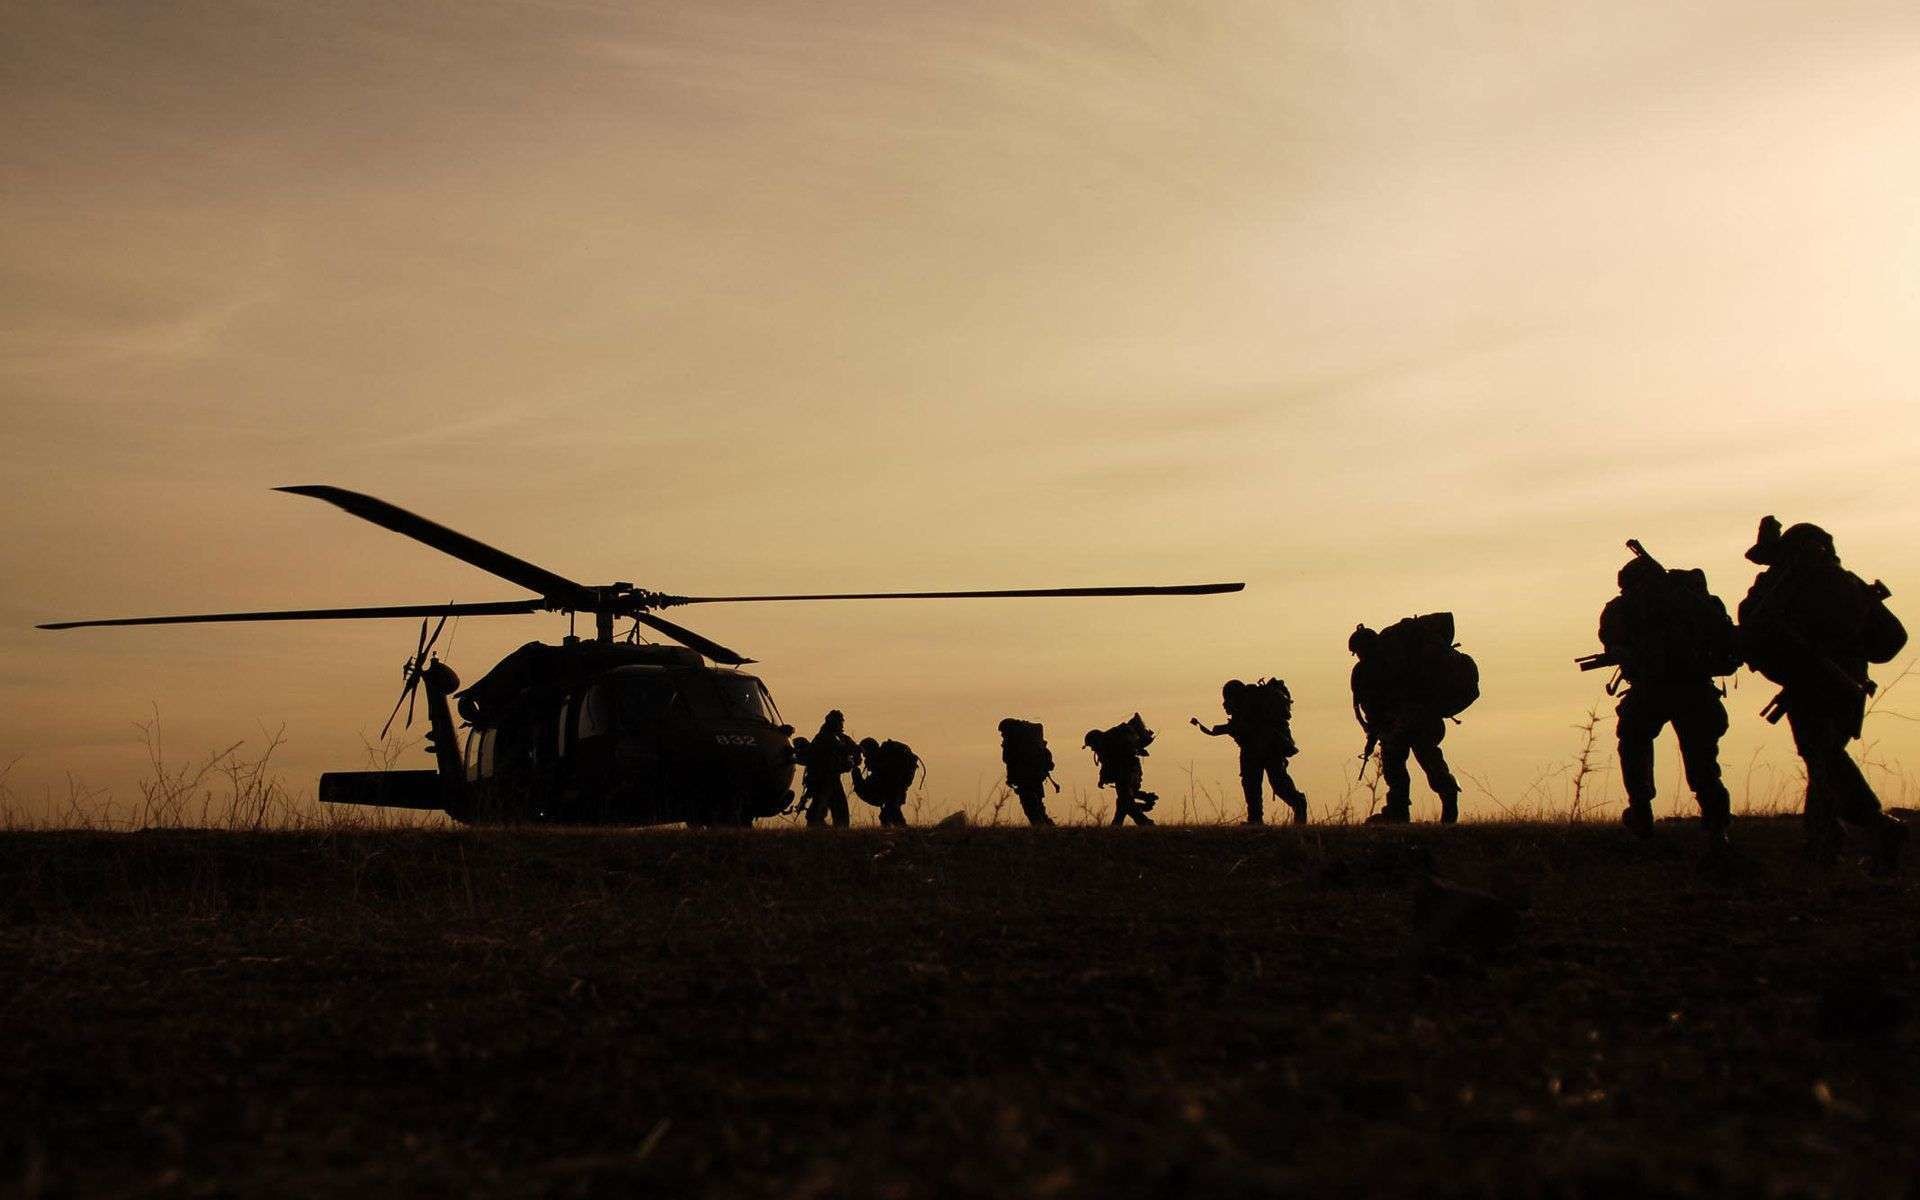 us army ranger wallpaper hd helicopter – https://hdwallpaper.info/us